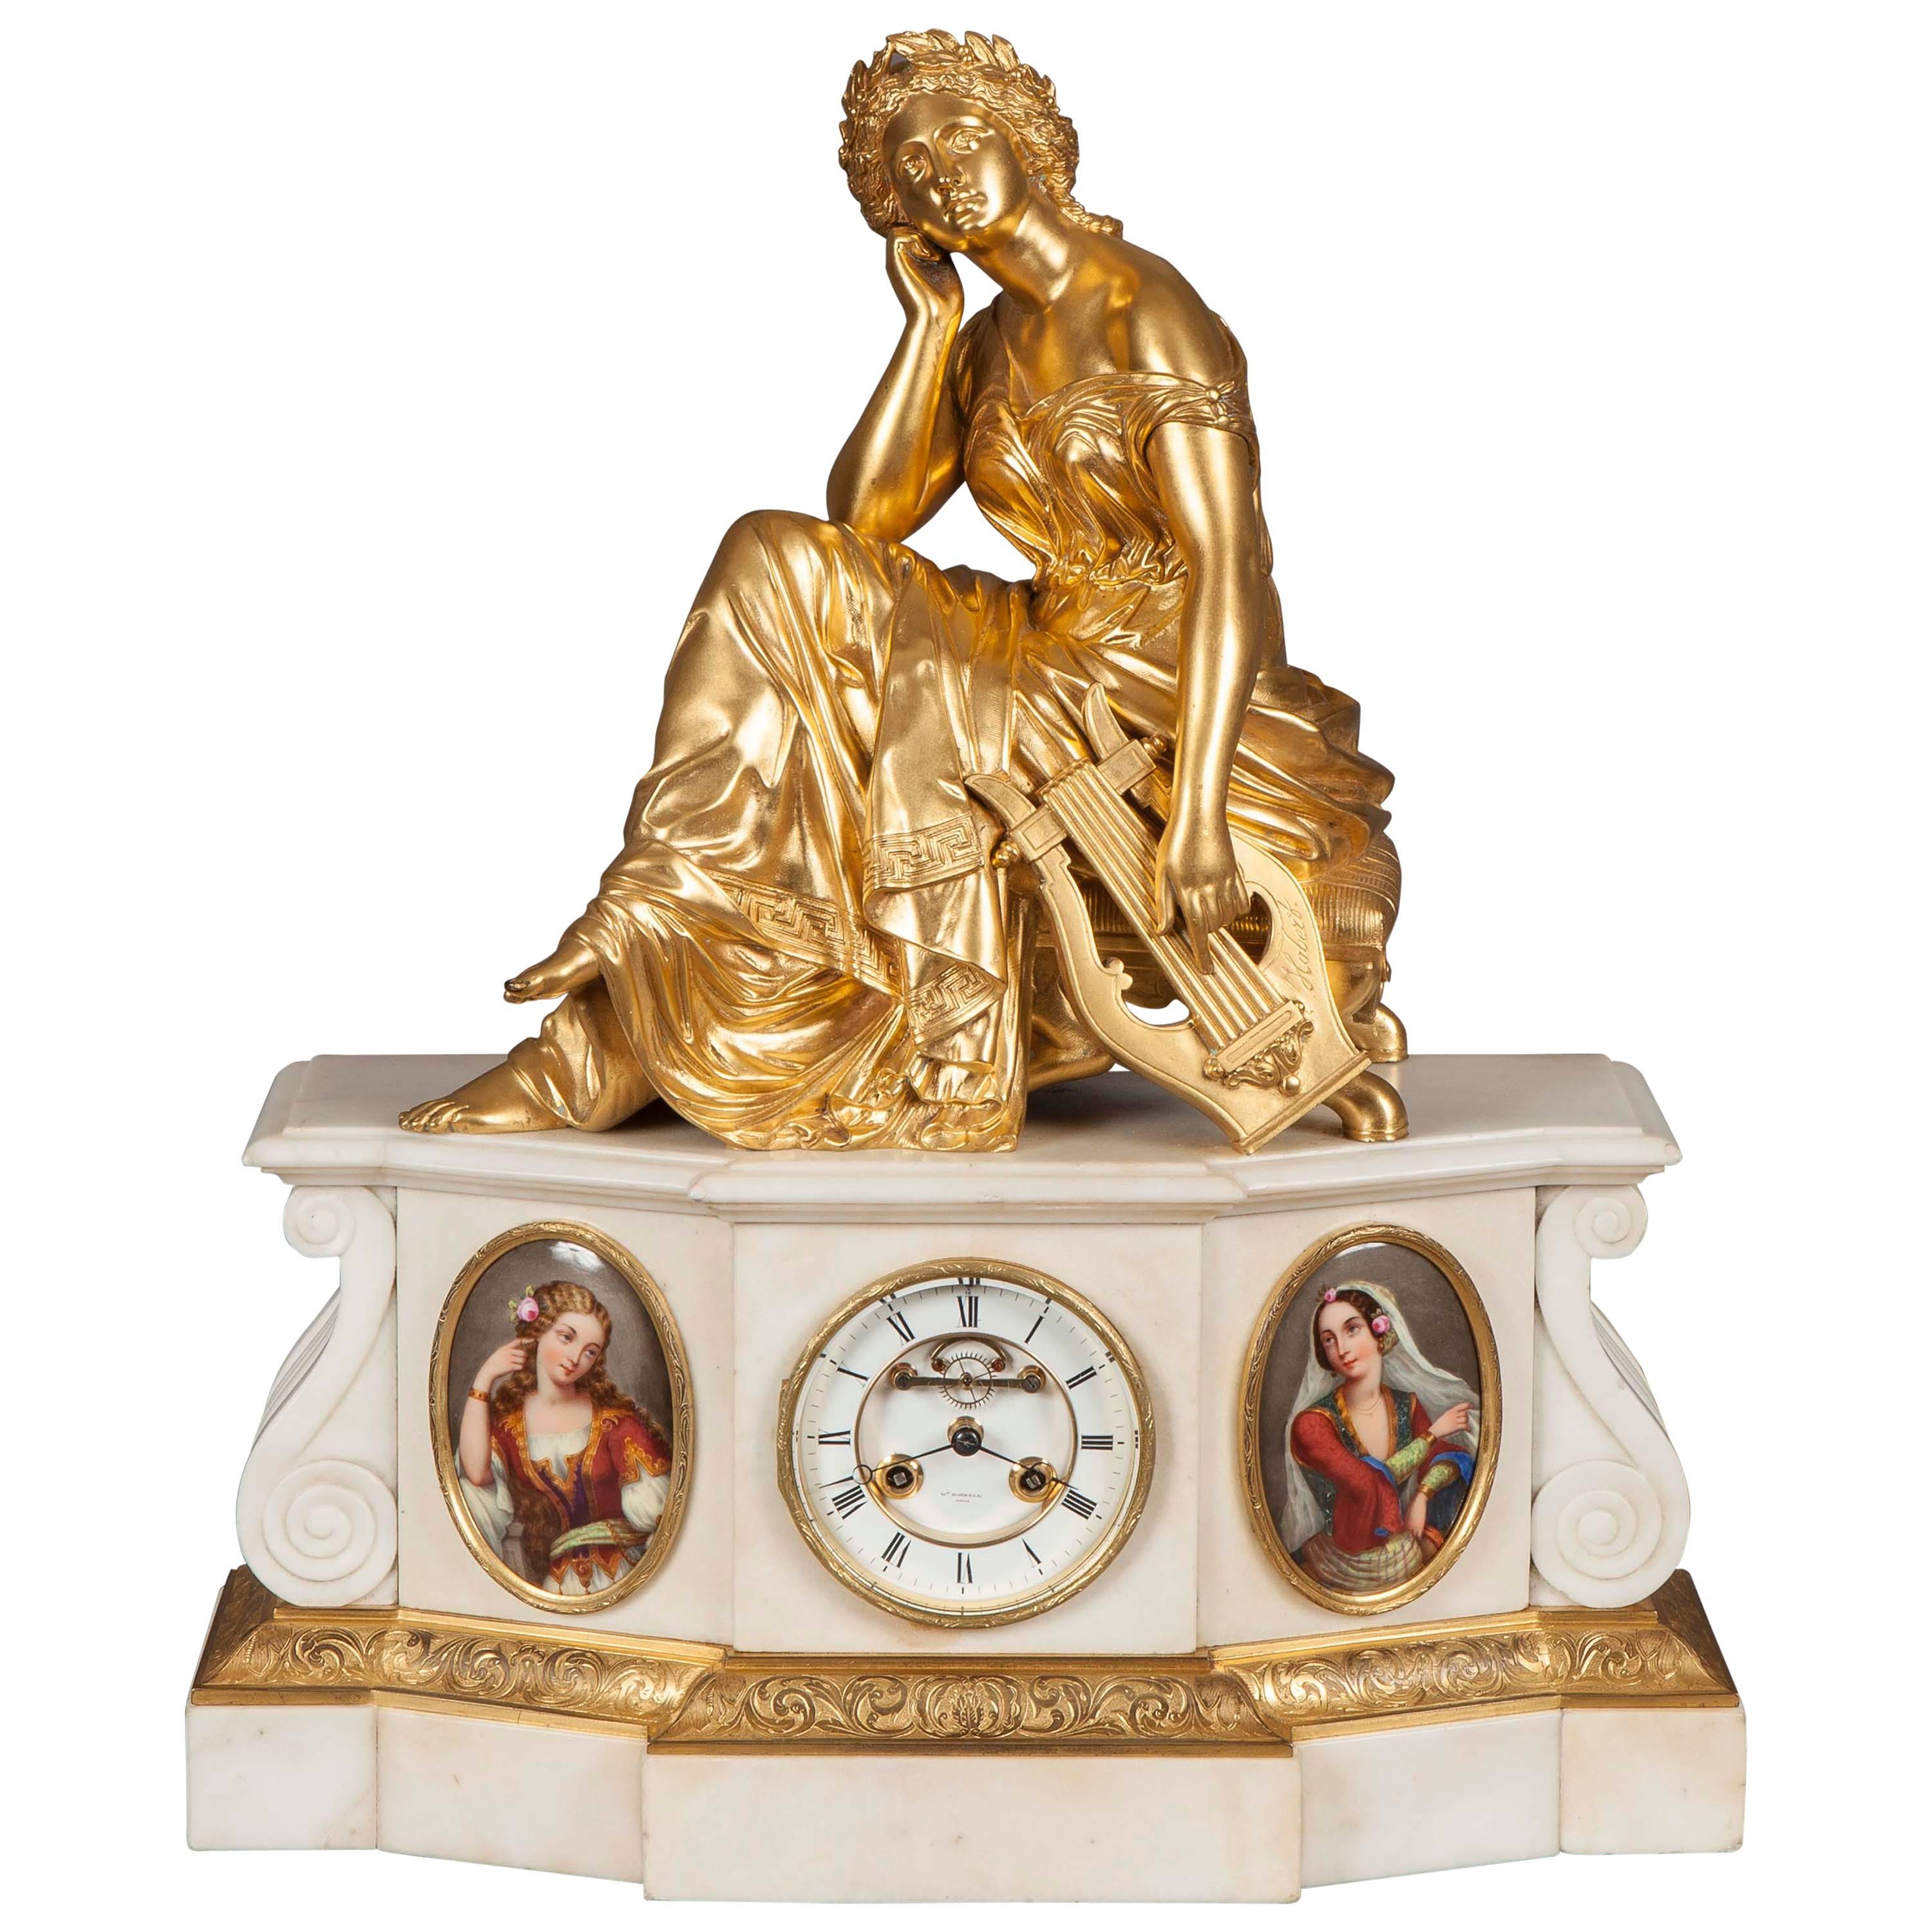 Antique Mantle Clock in the Louis XVI Manner